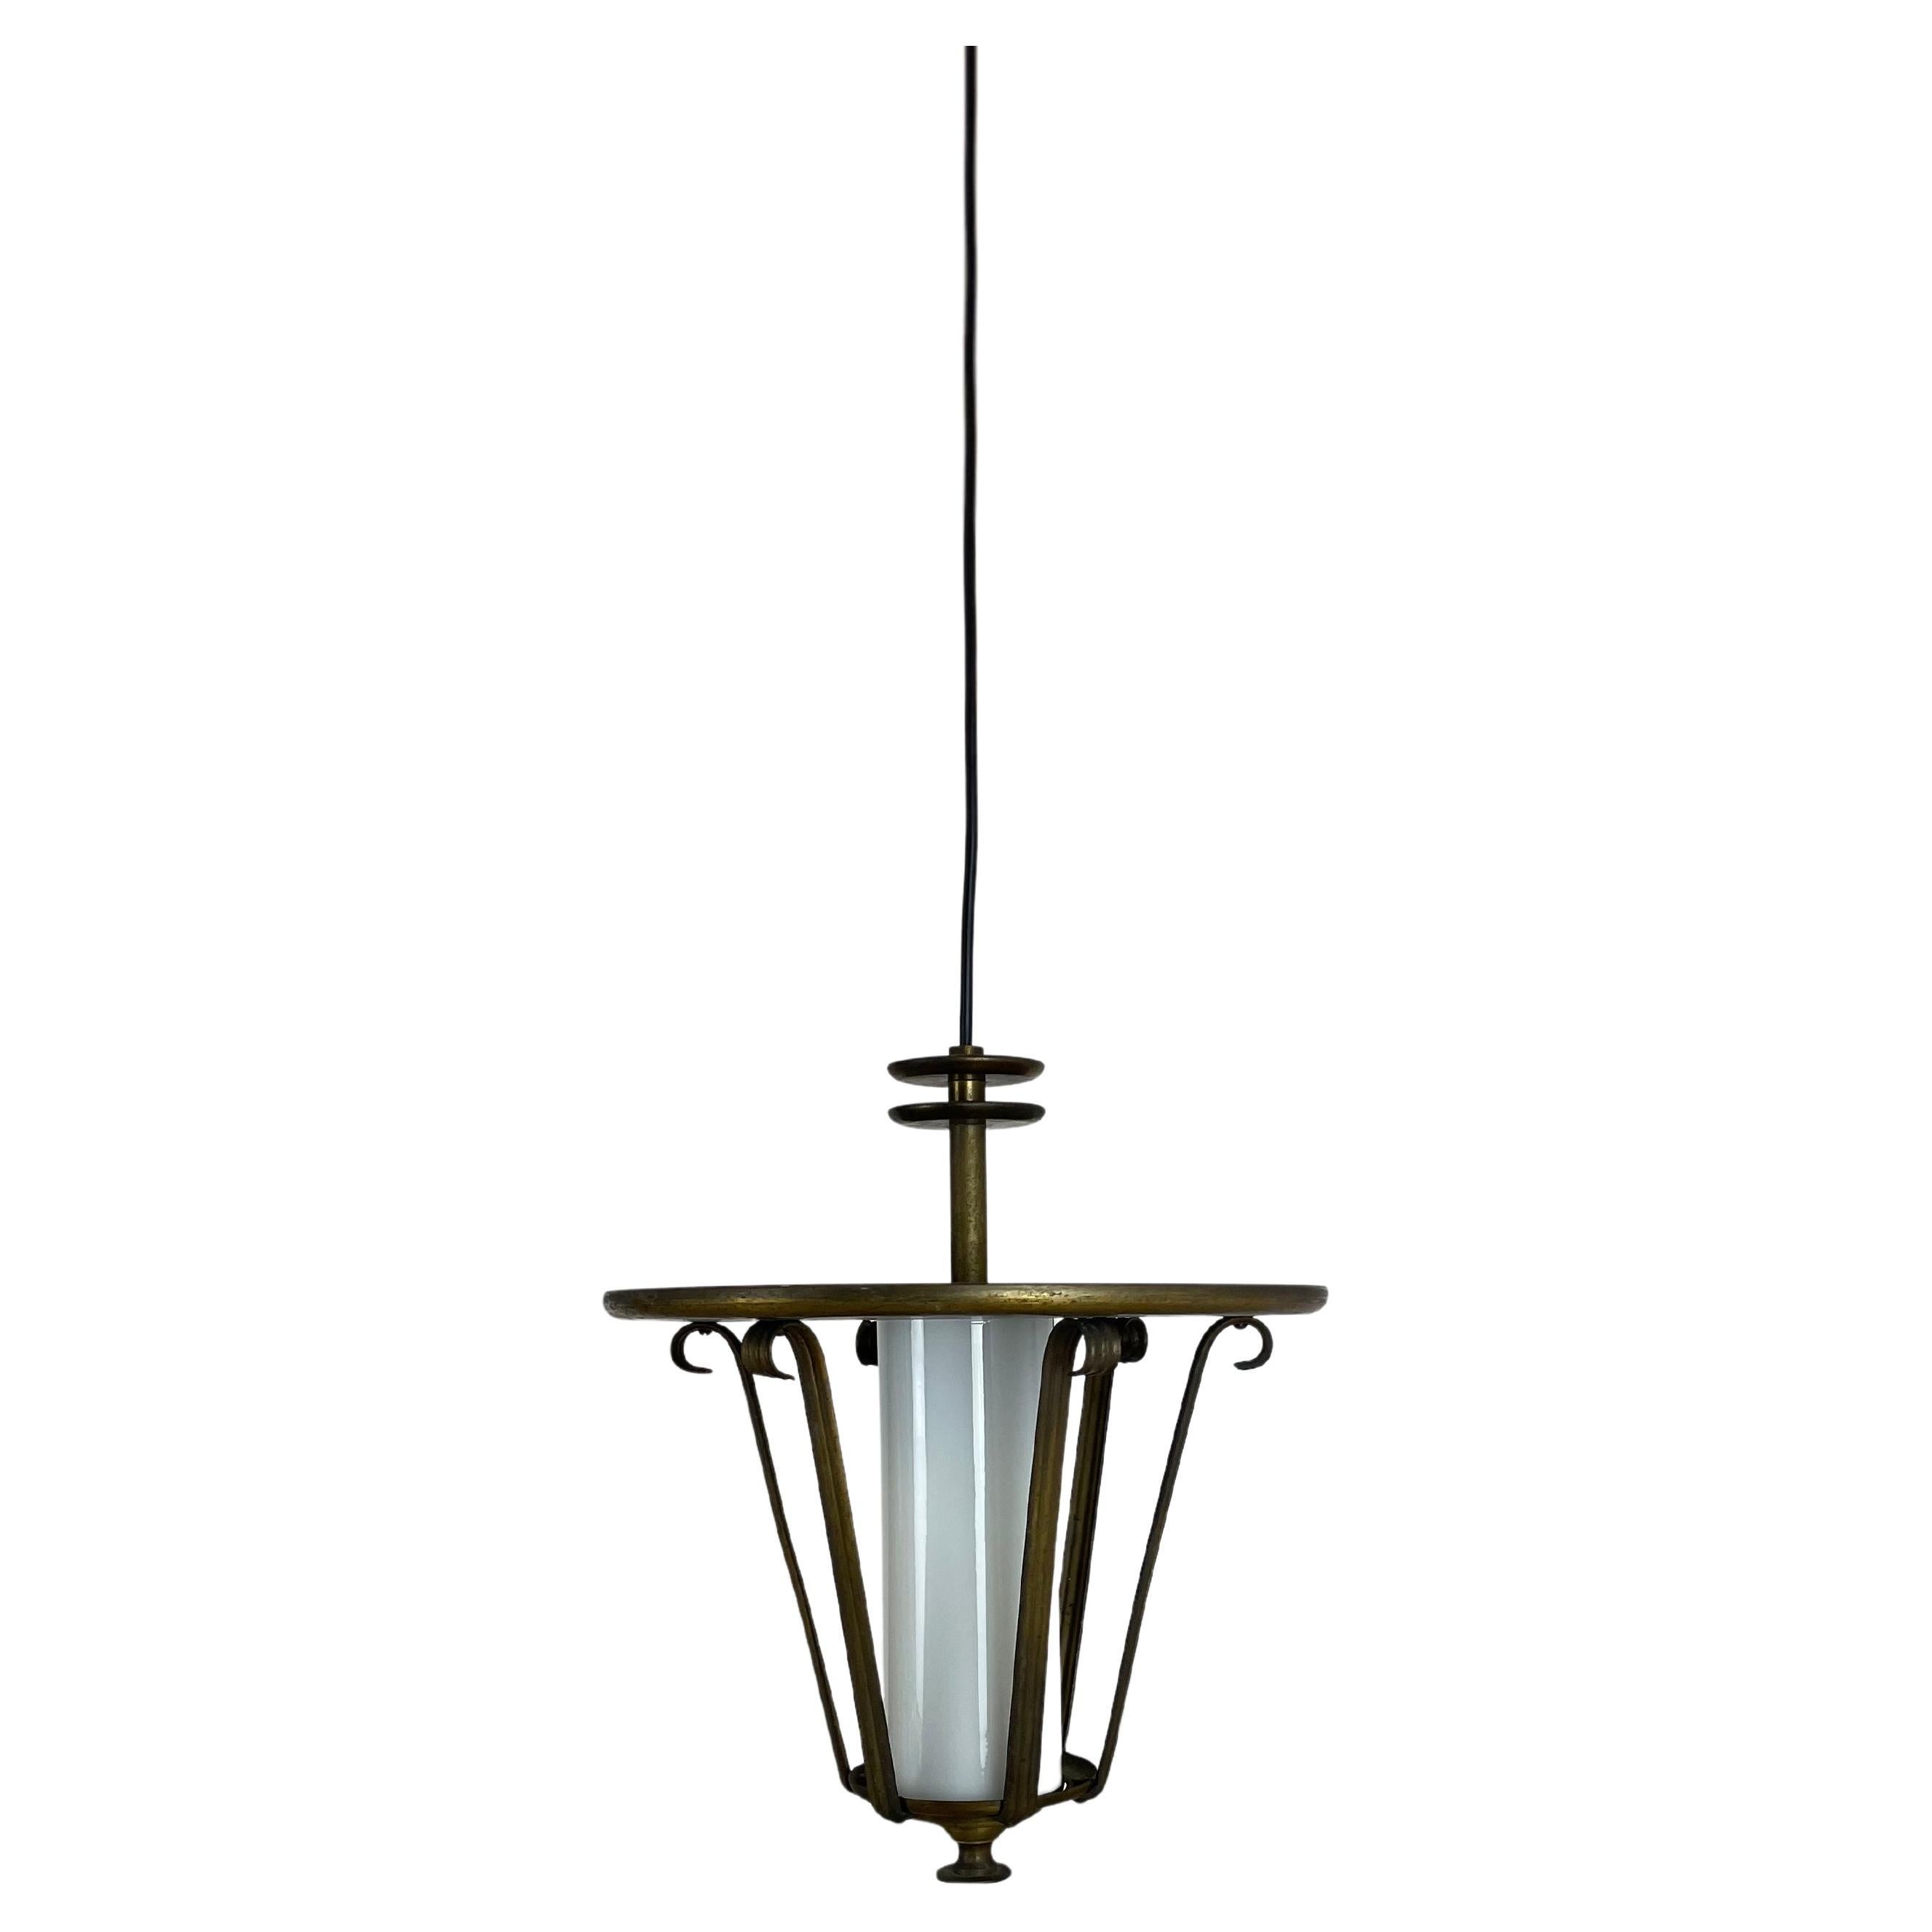 Midcentury Stilnovo Style Brass and Glass Tube Hanging Lantern Light, Italy 1950 For Sale